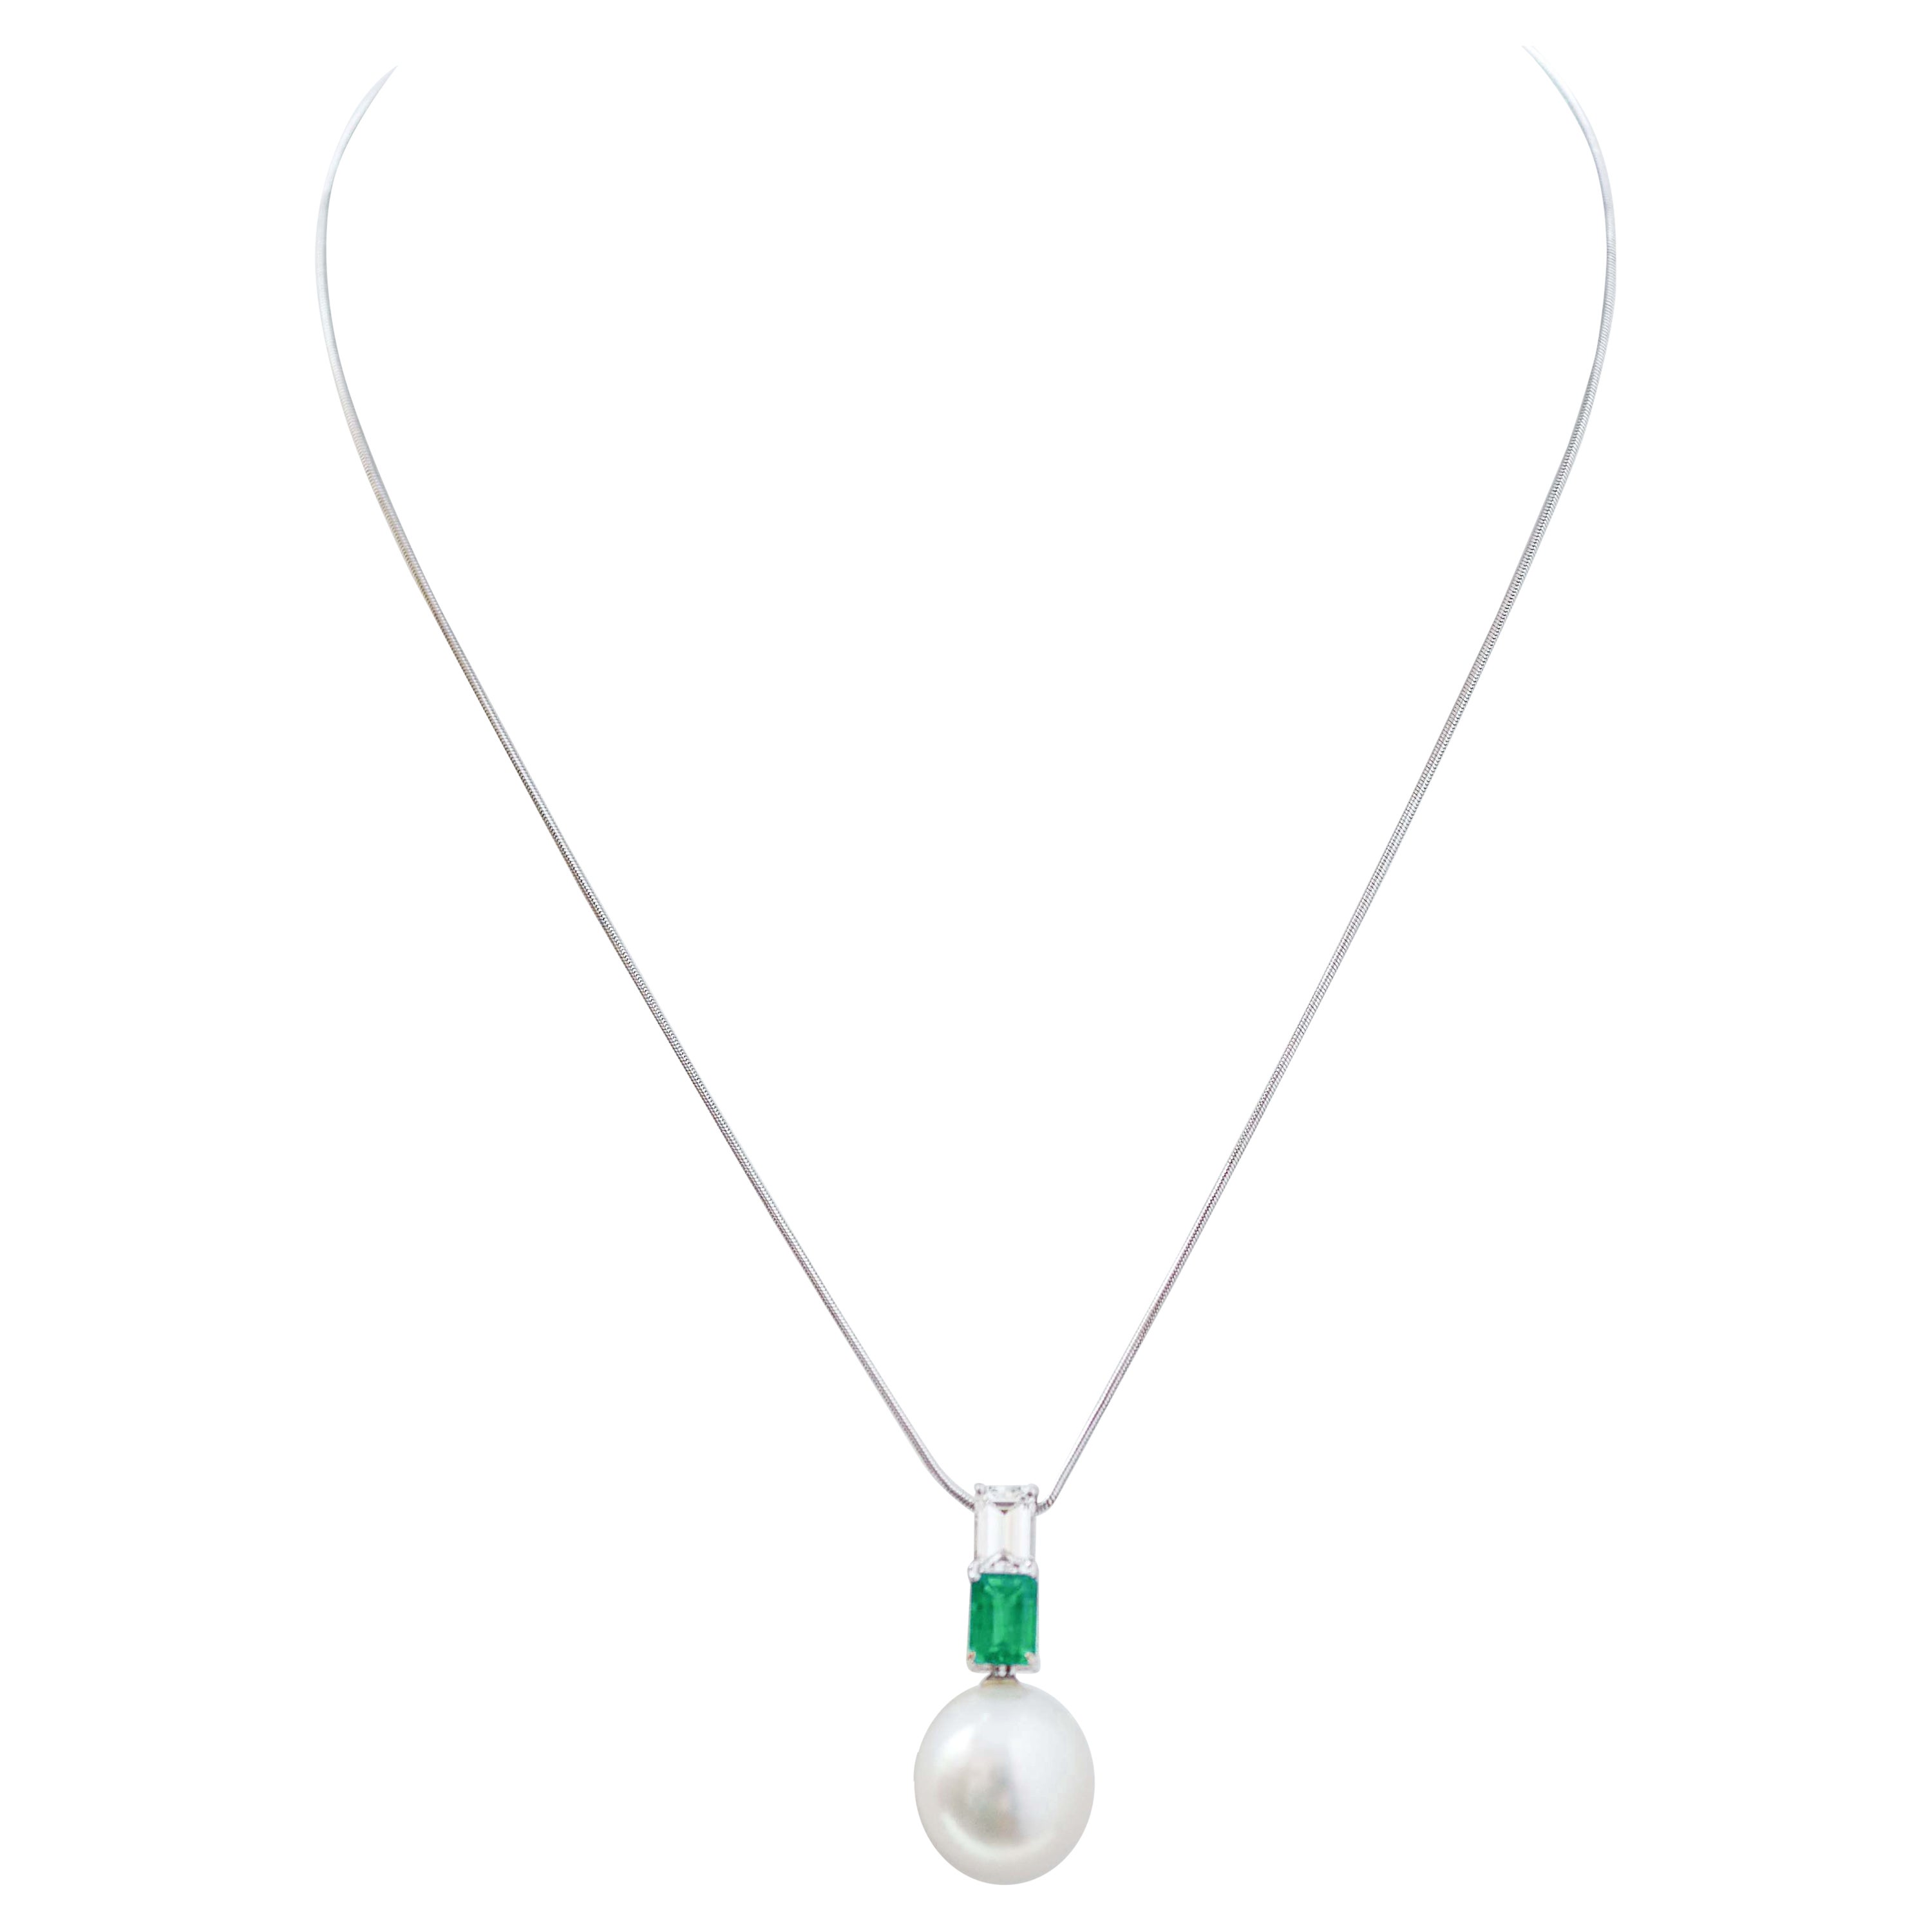 Pearl, Emerald, Diamonds, 18 Karat White Gold Pendant Necklace. For Sale